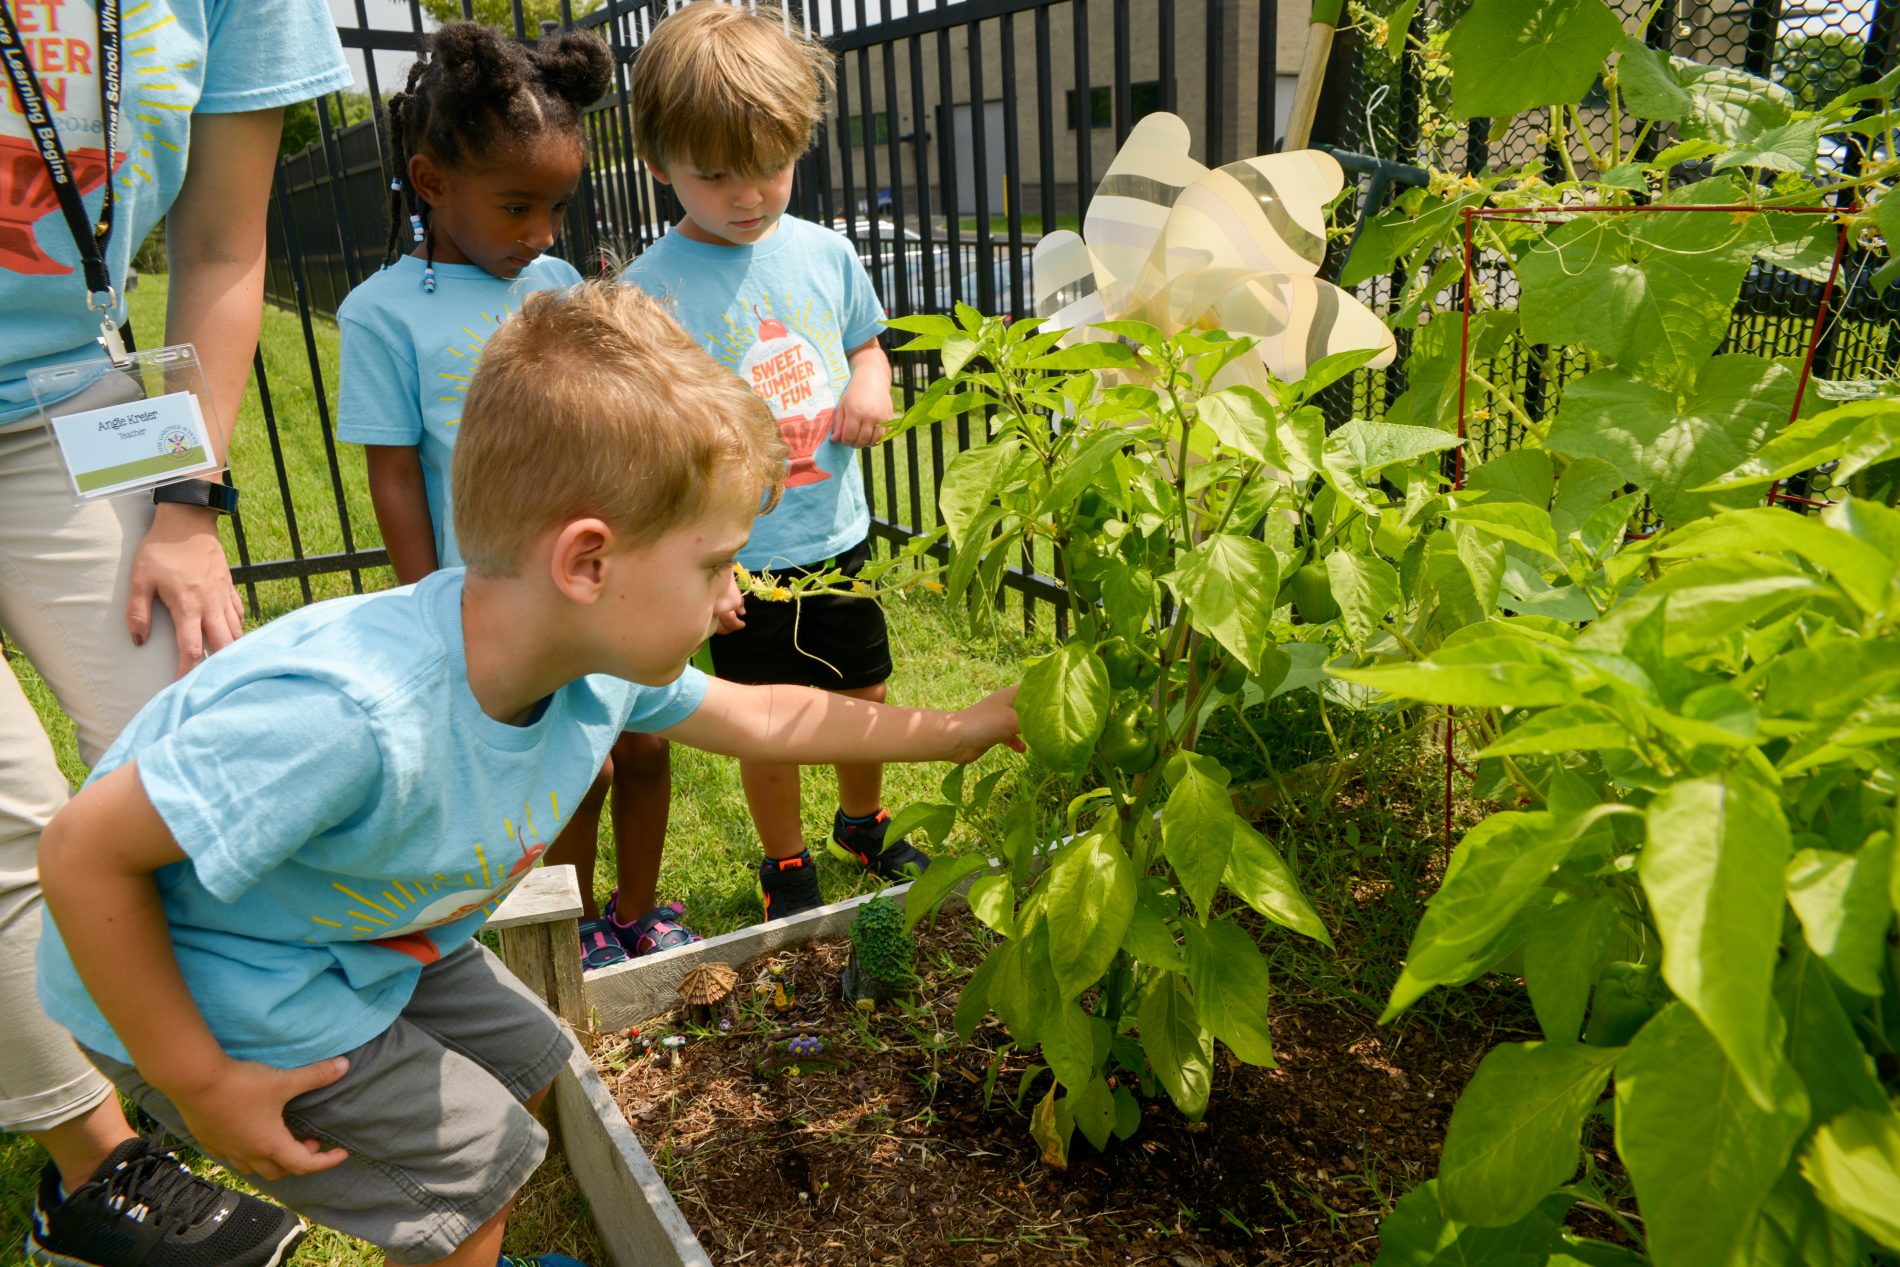 Preschoolers learning about plants